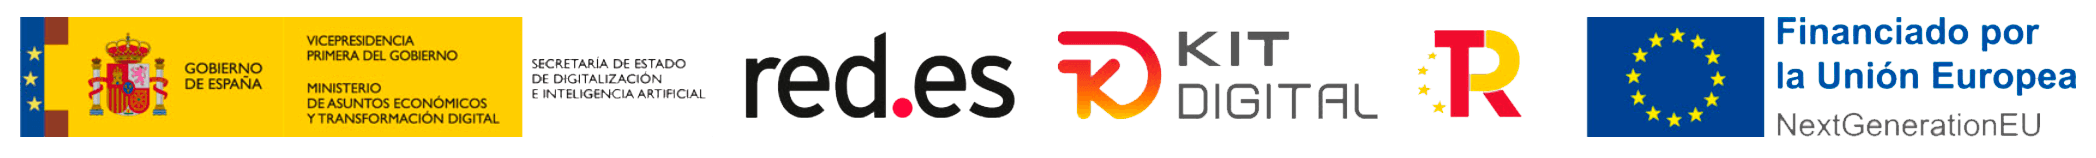 logos del KIT DIGITAL